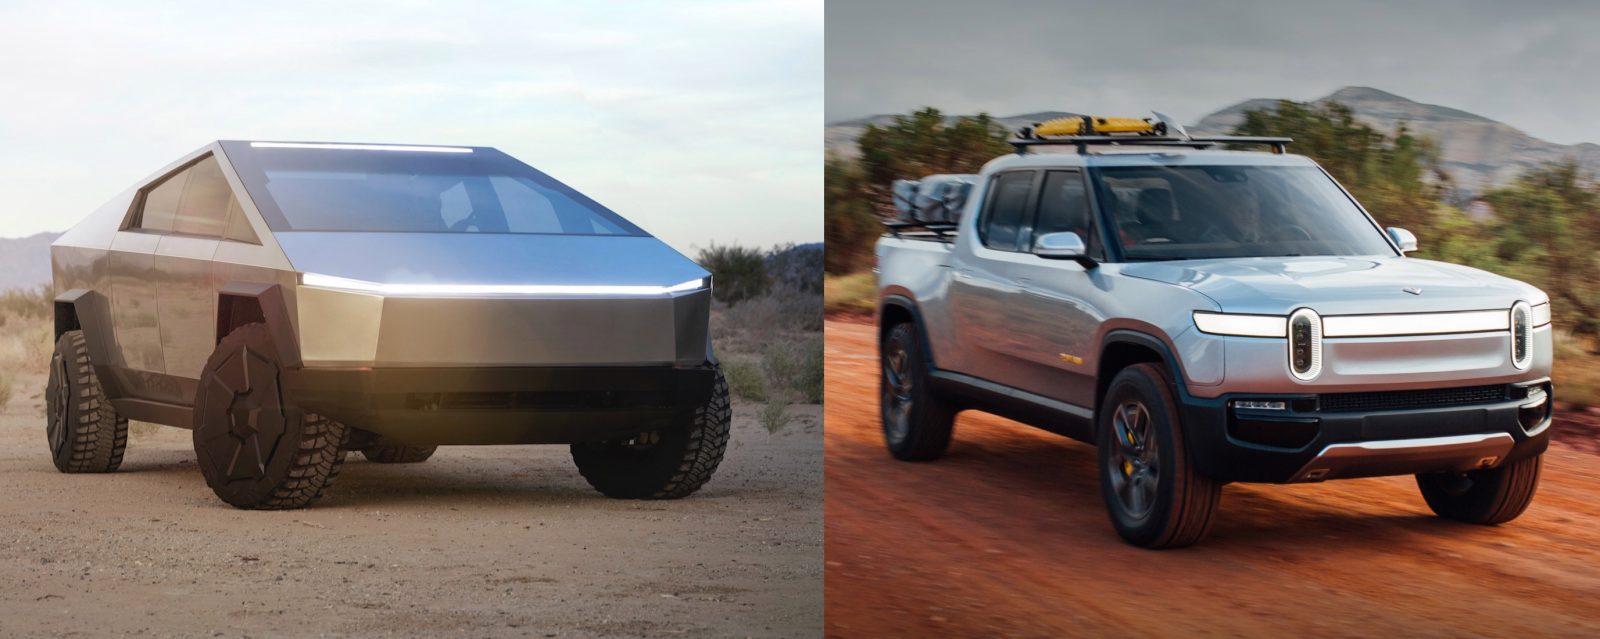 Tesla Cybertruck vs. Rivian R1T electric pickup comparison